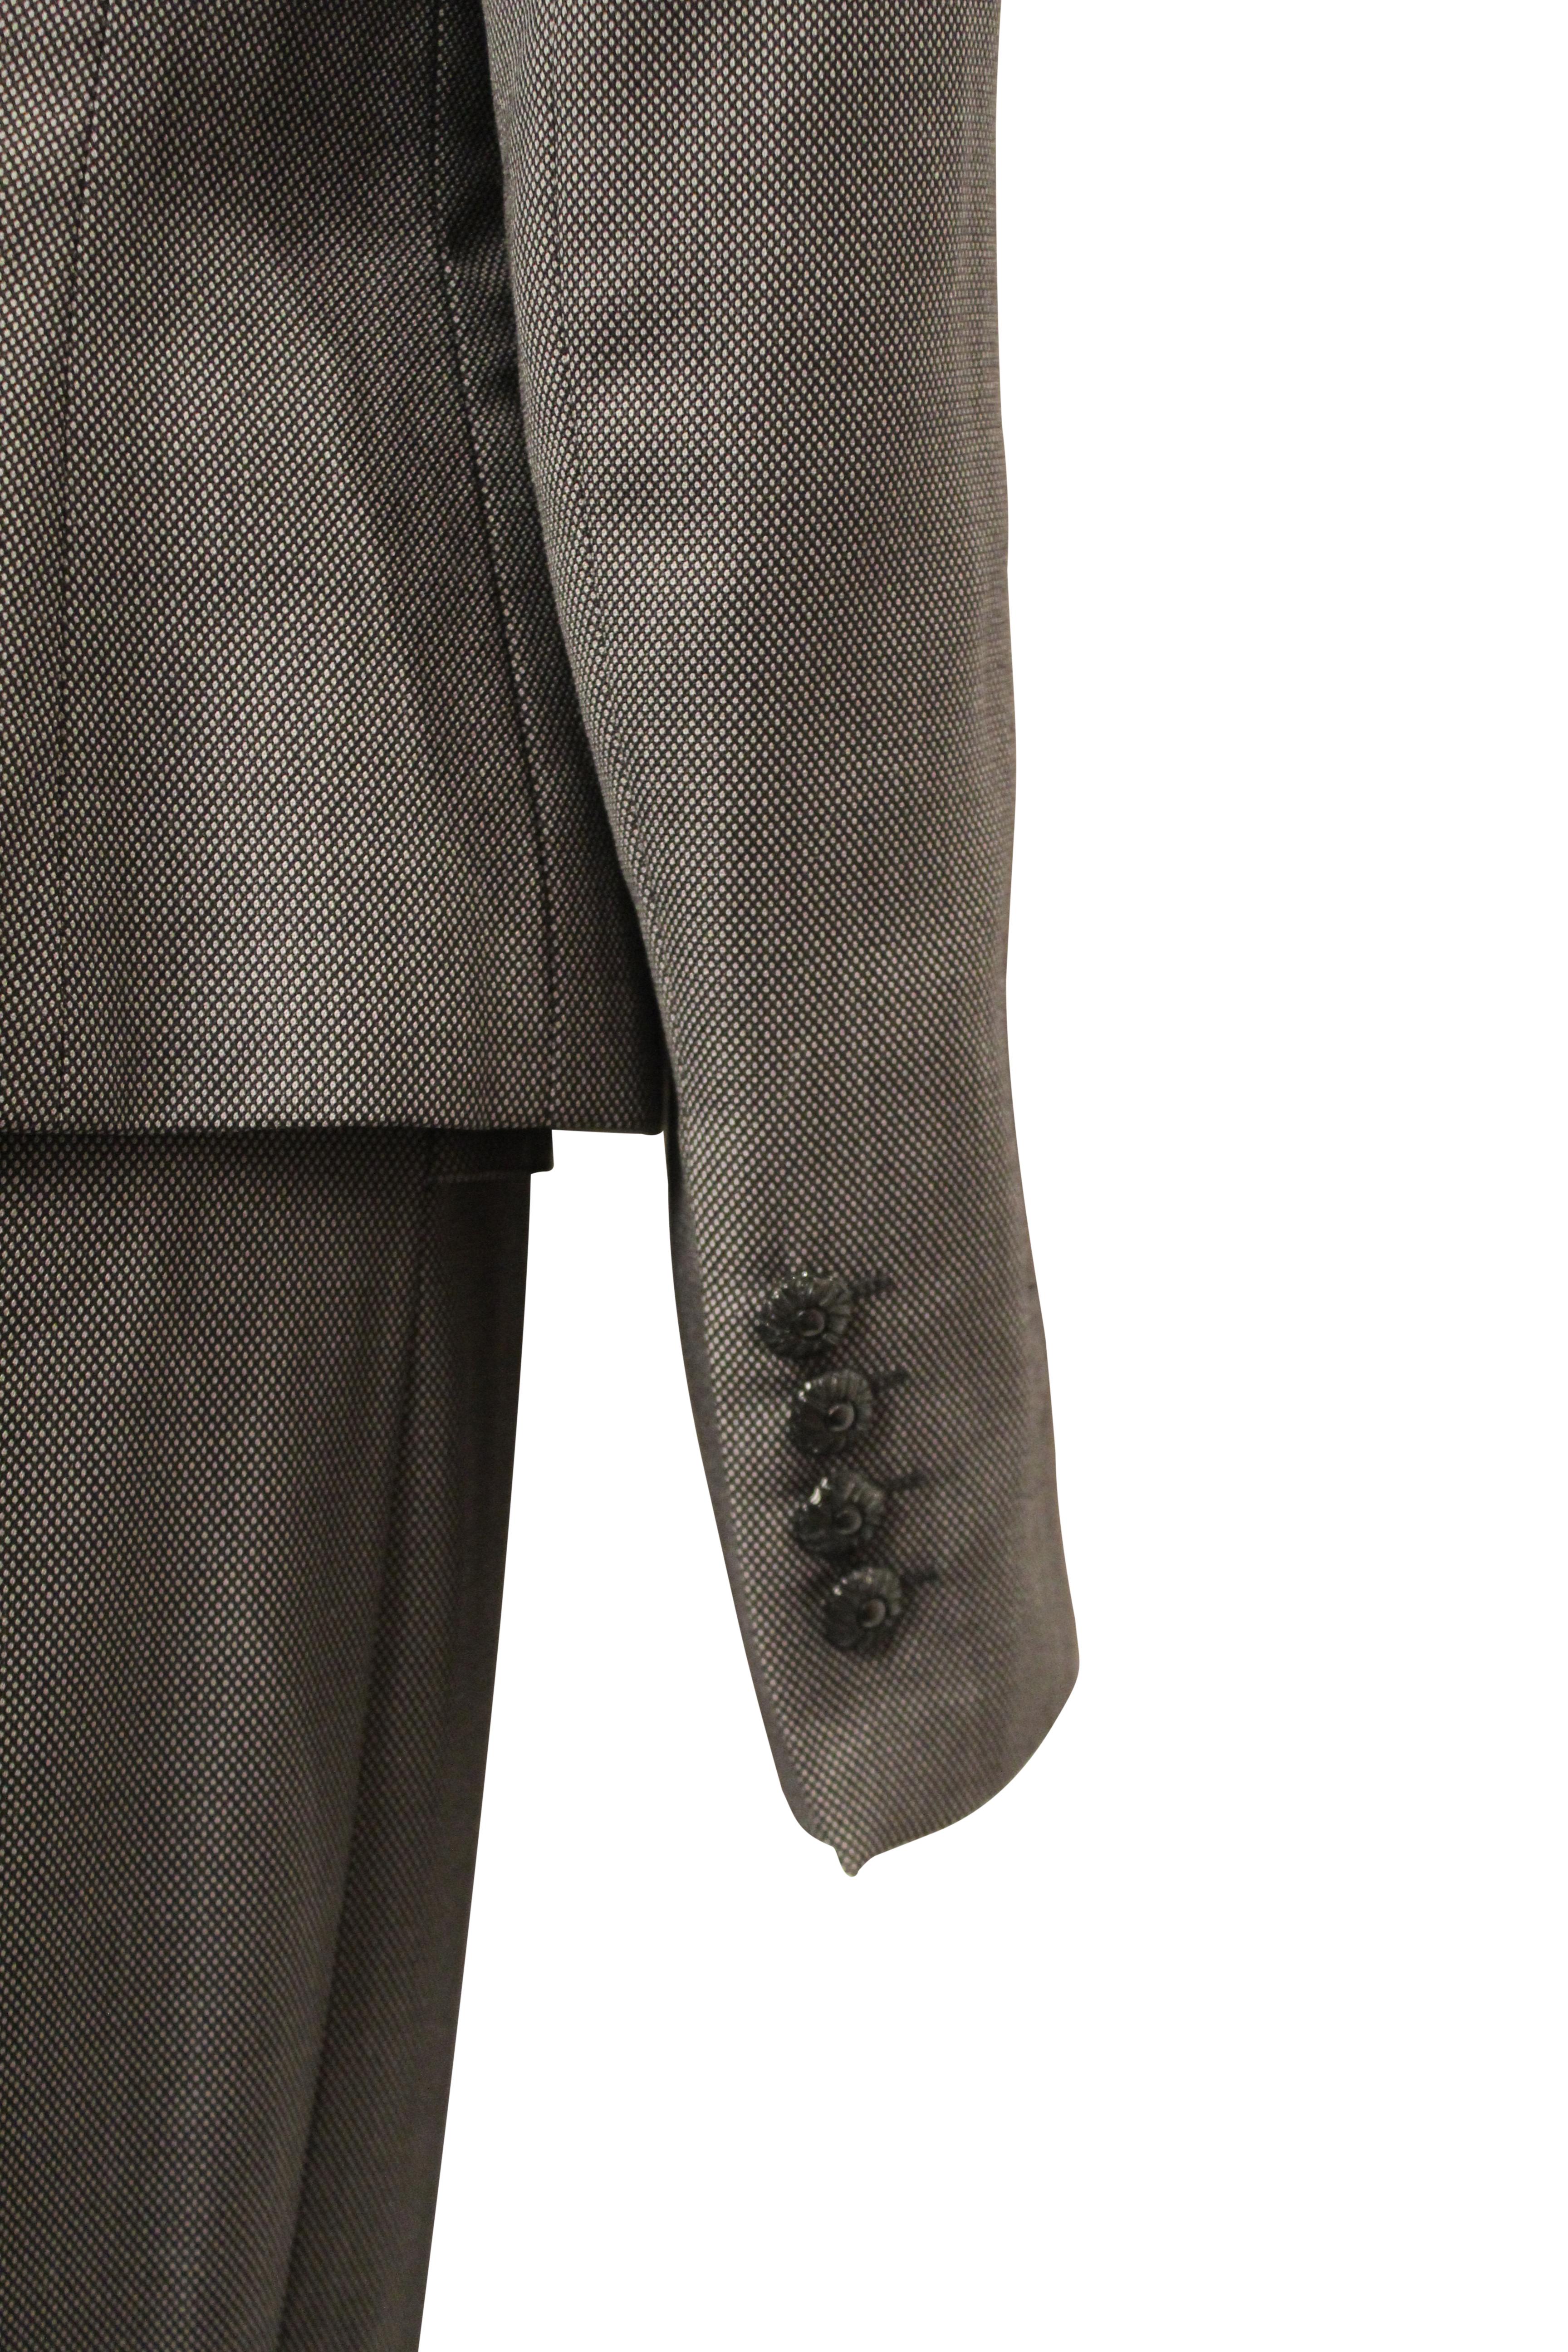 Black John Galliano Pant Suit  For Sale